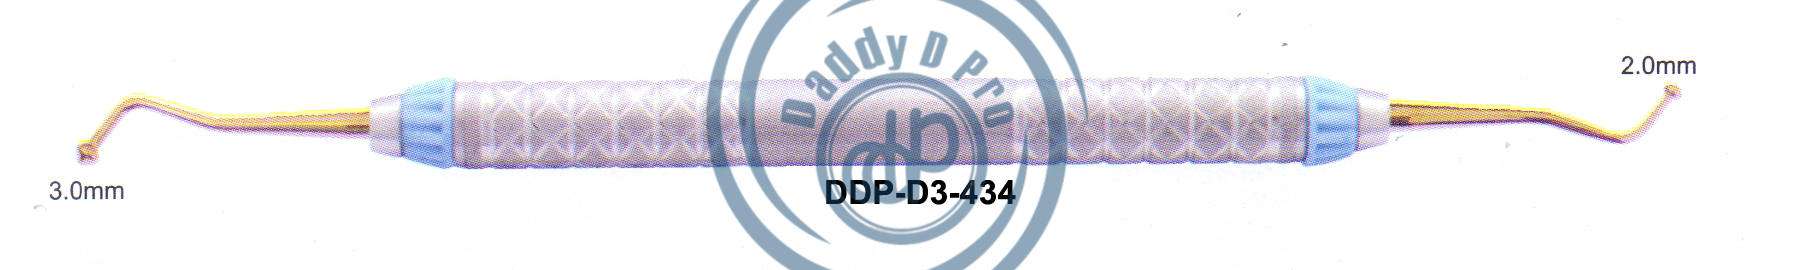 images/DDP-D3-434.png